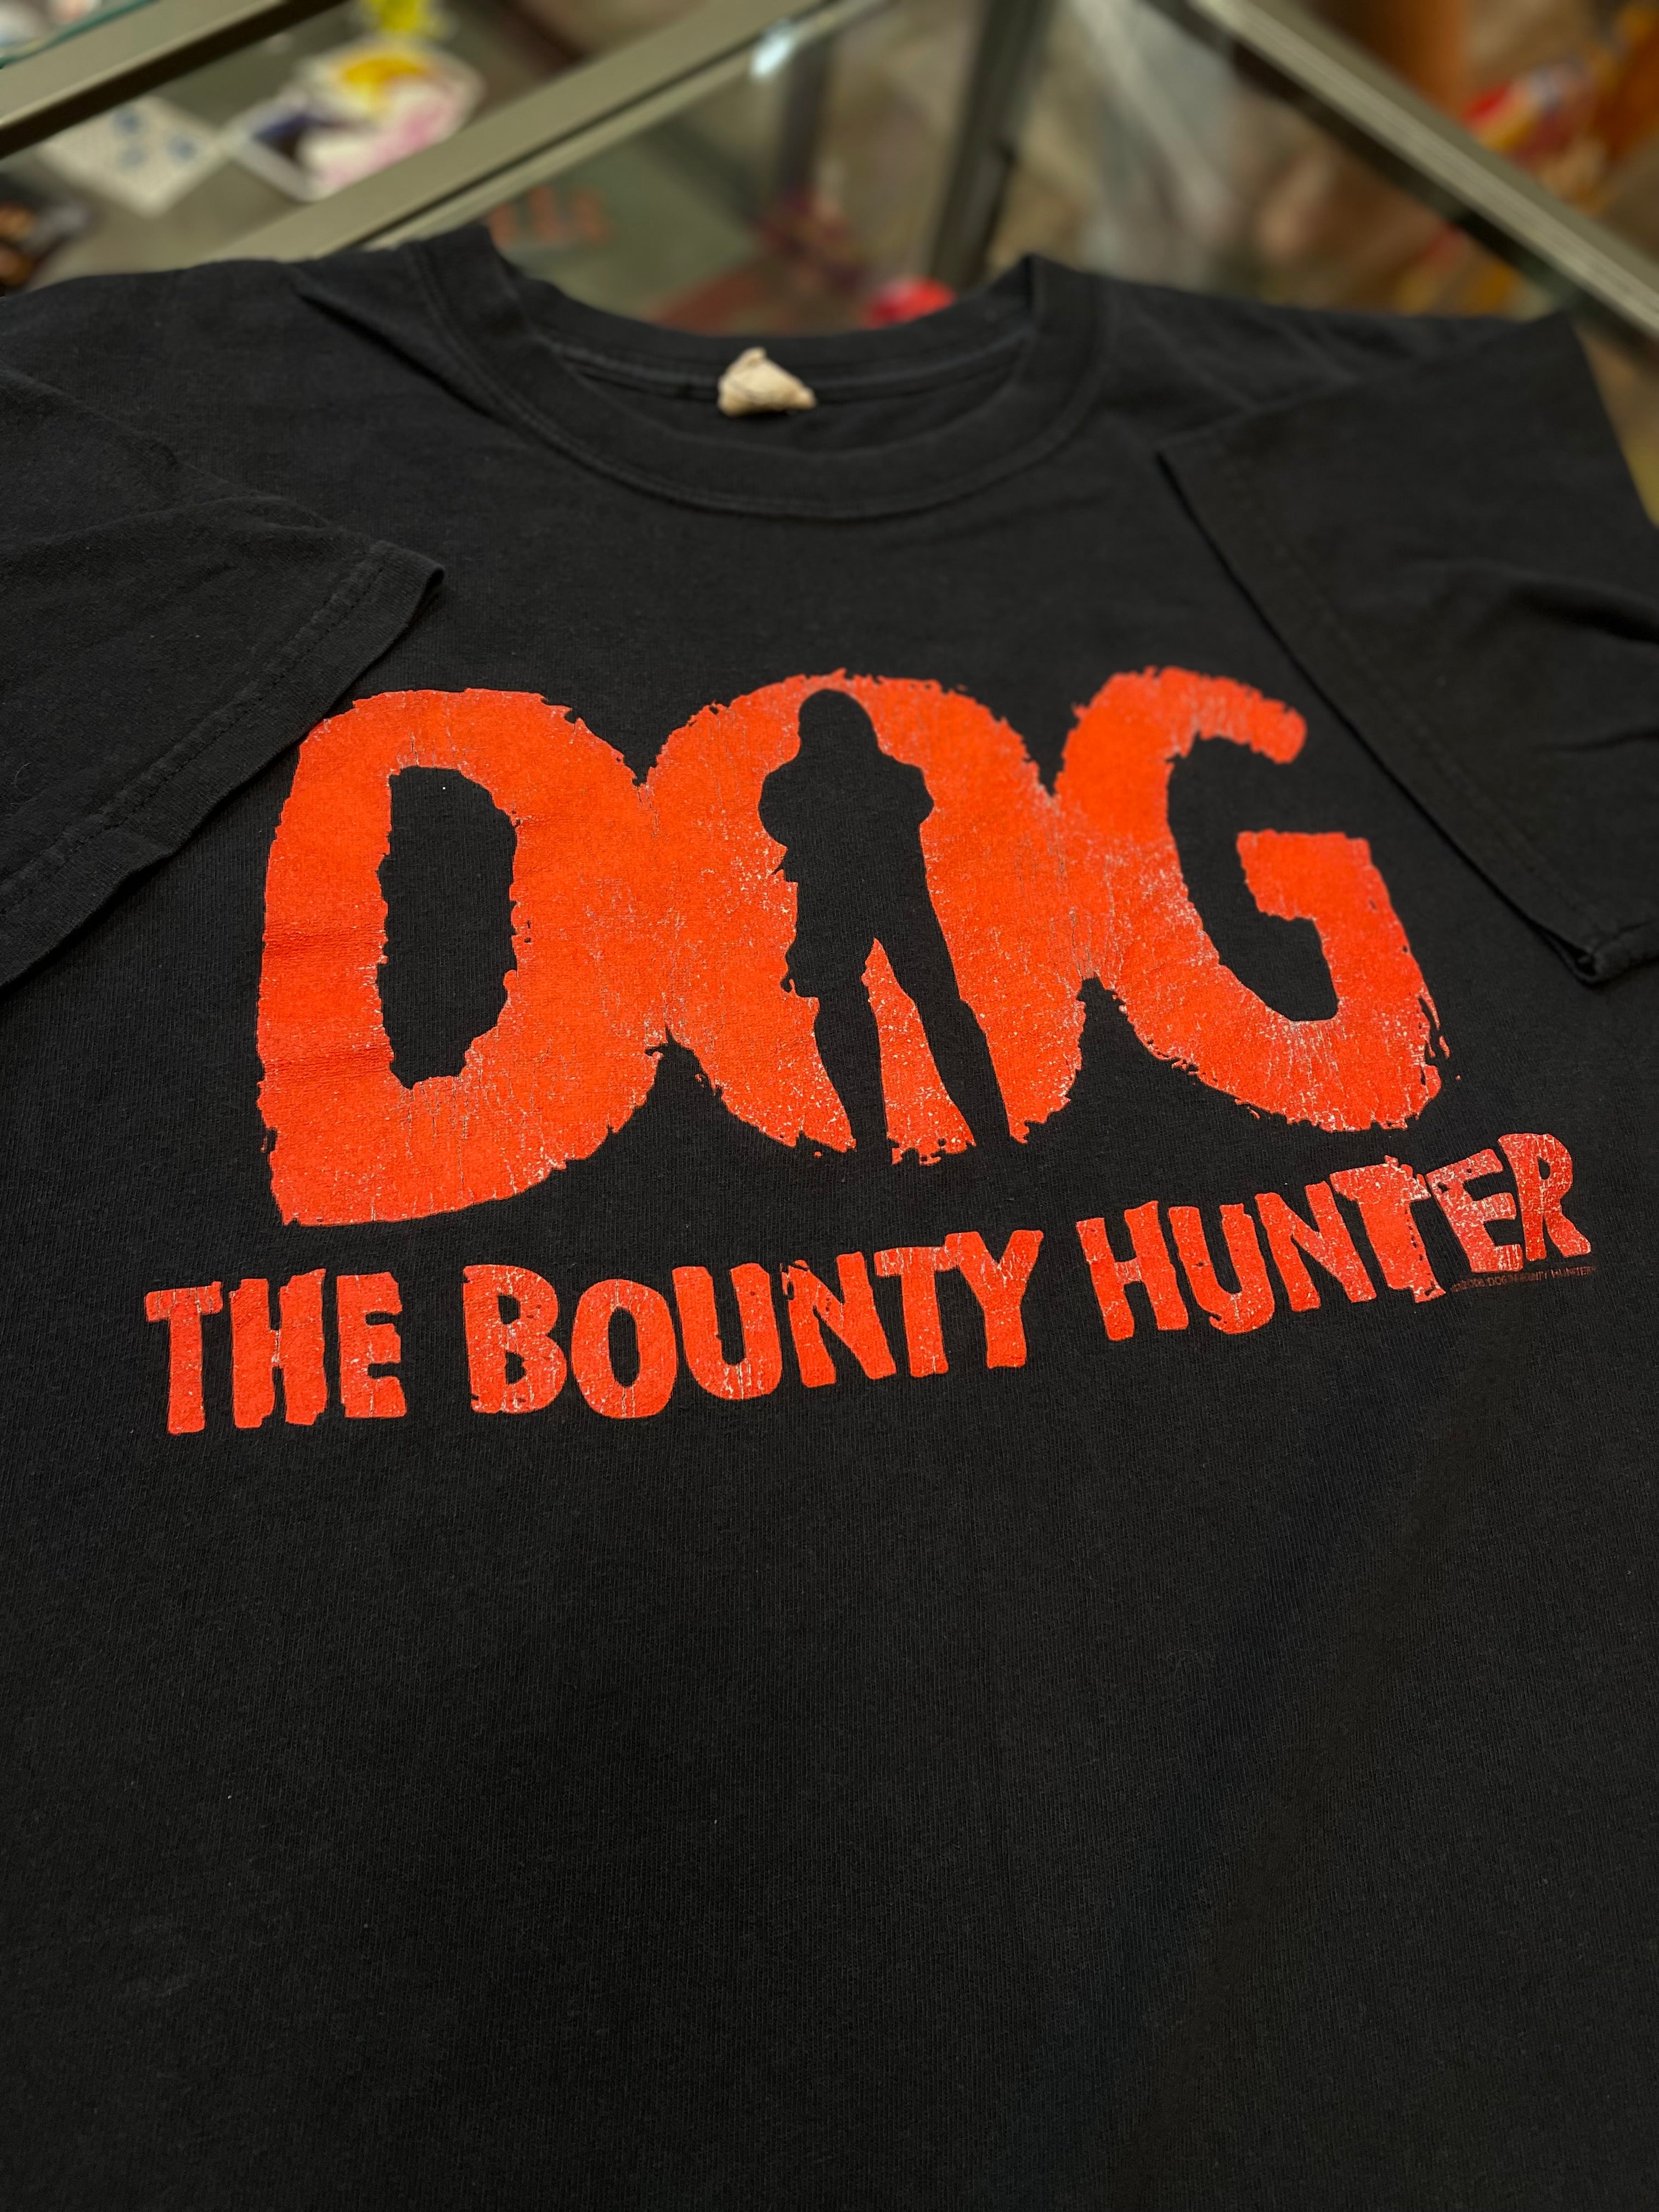 Dog The Bounty Hunter Promo Tee